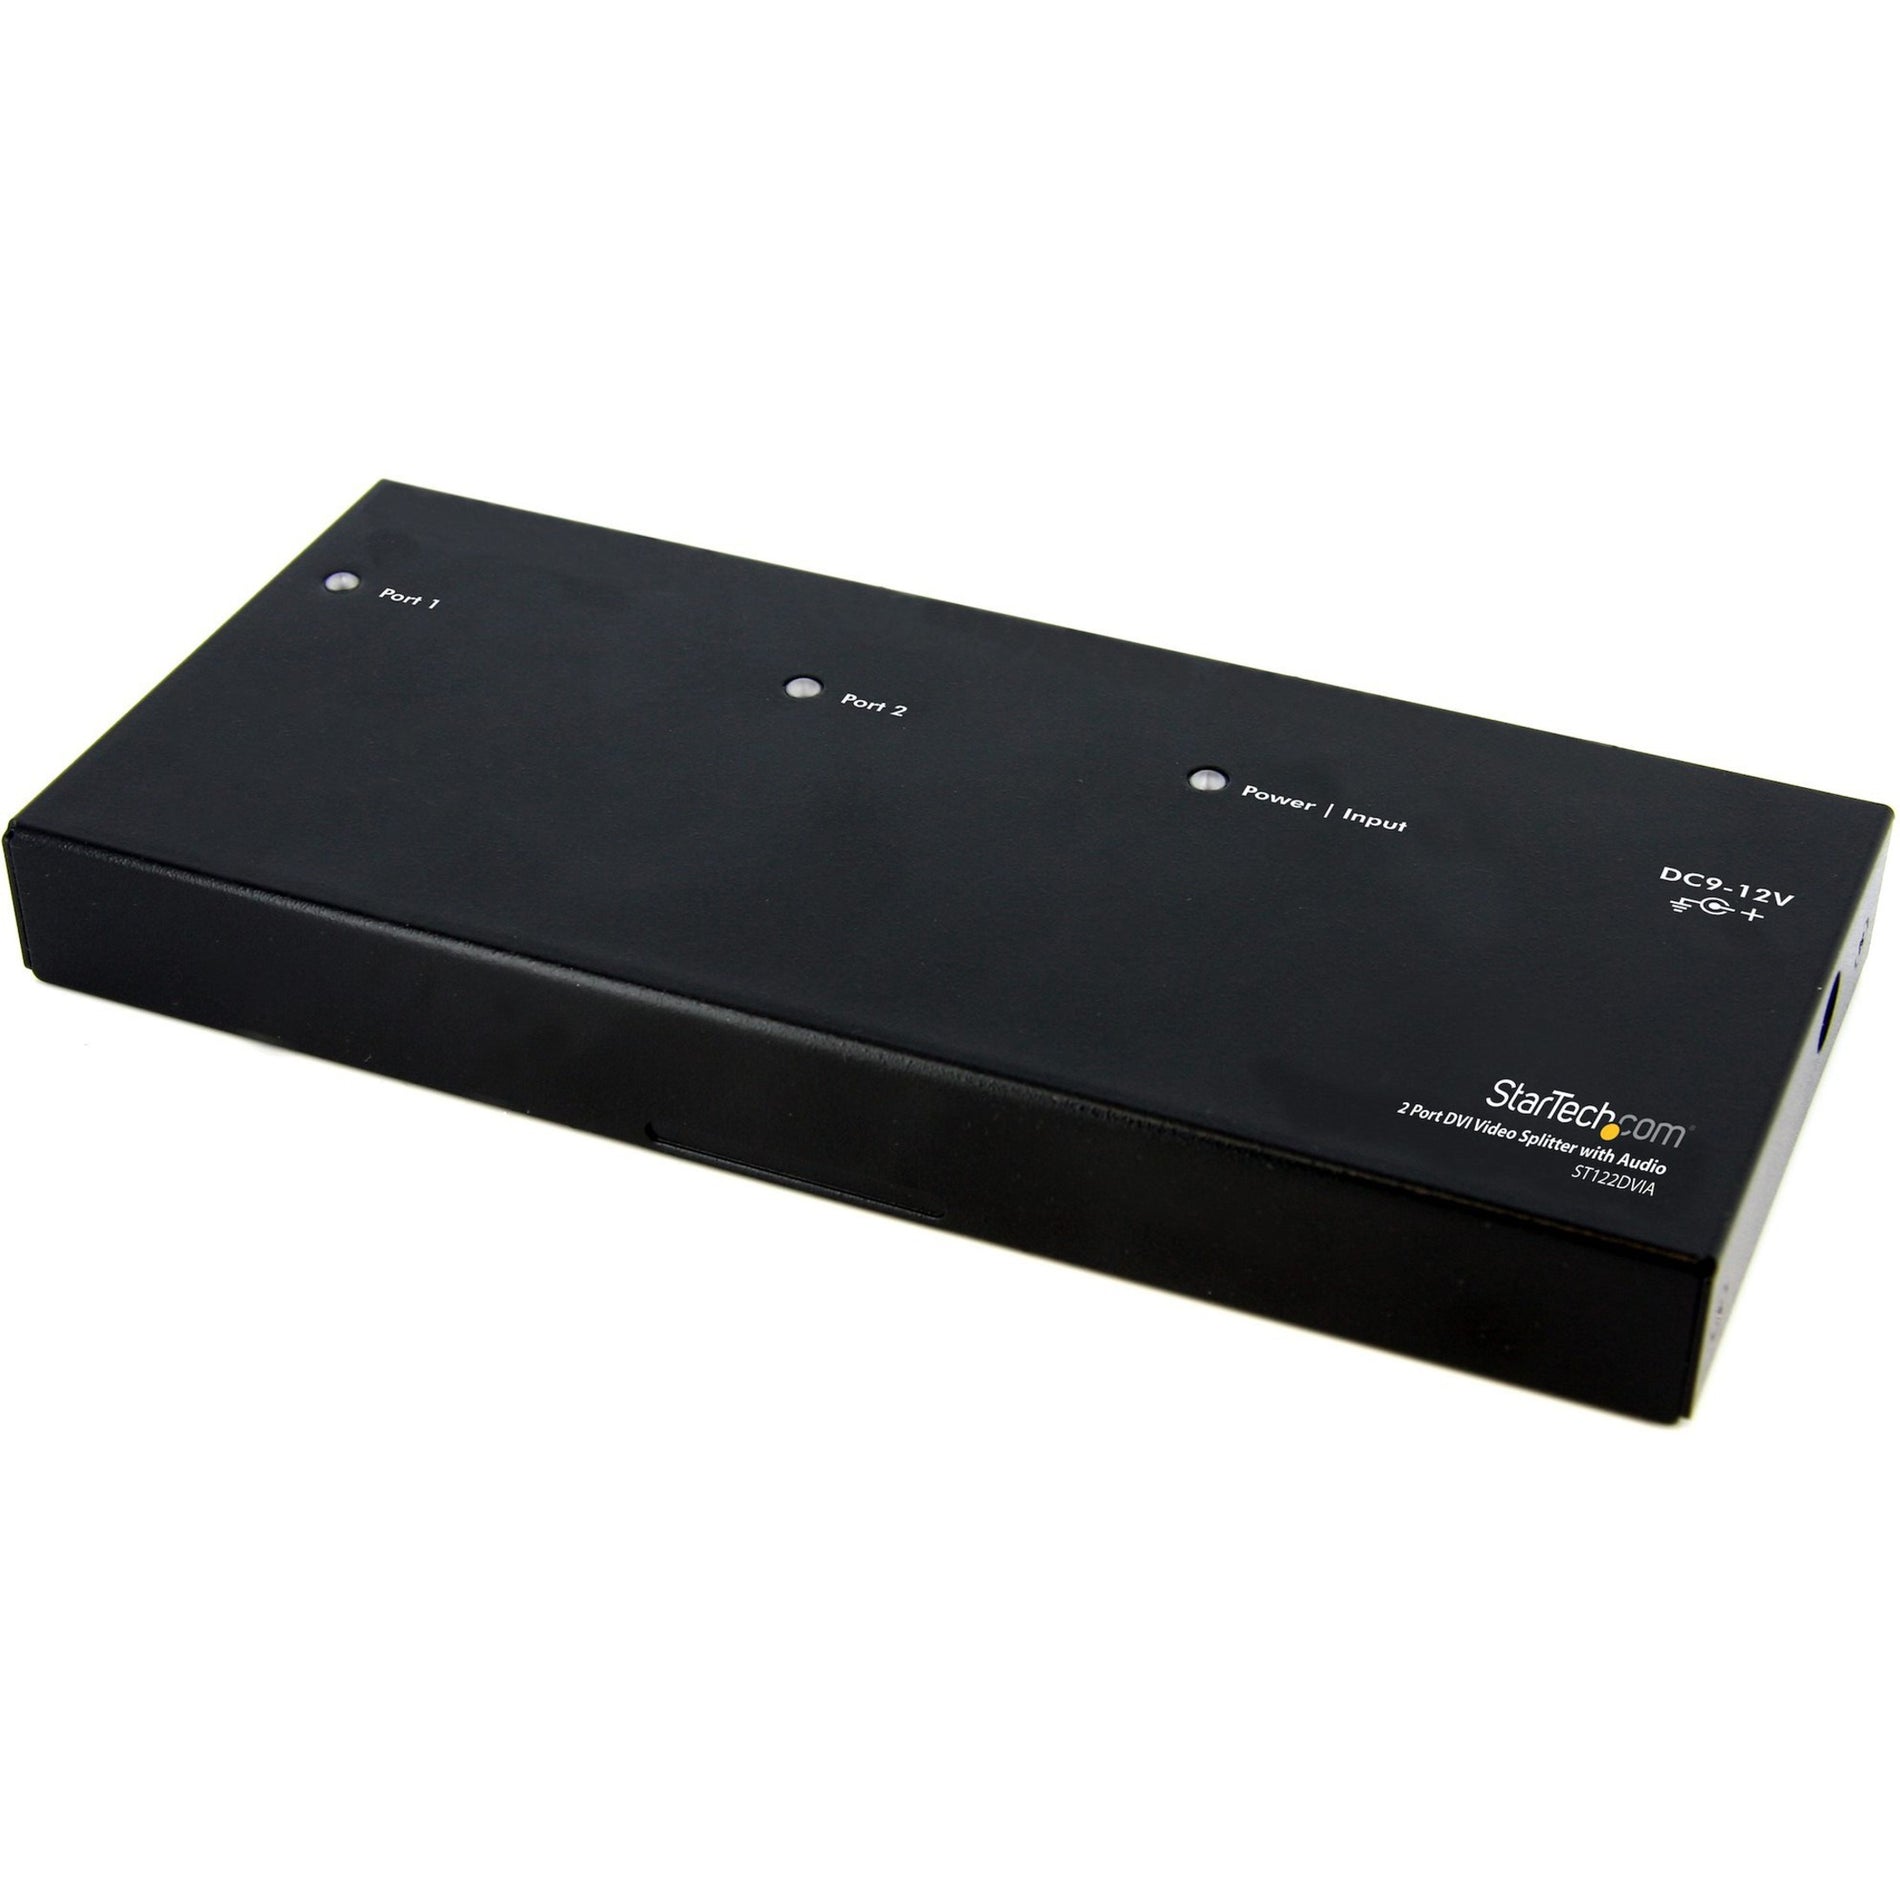 StarTech.com ST122DVIA 2 Port DVI Video Splitter with Audio, Maximum Resolution 1920 x 1200